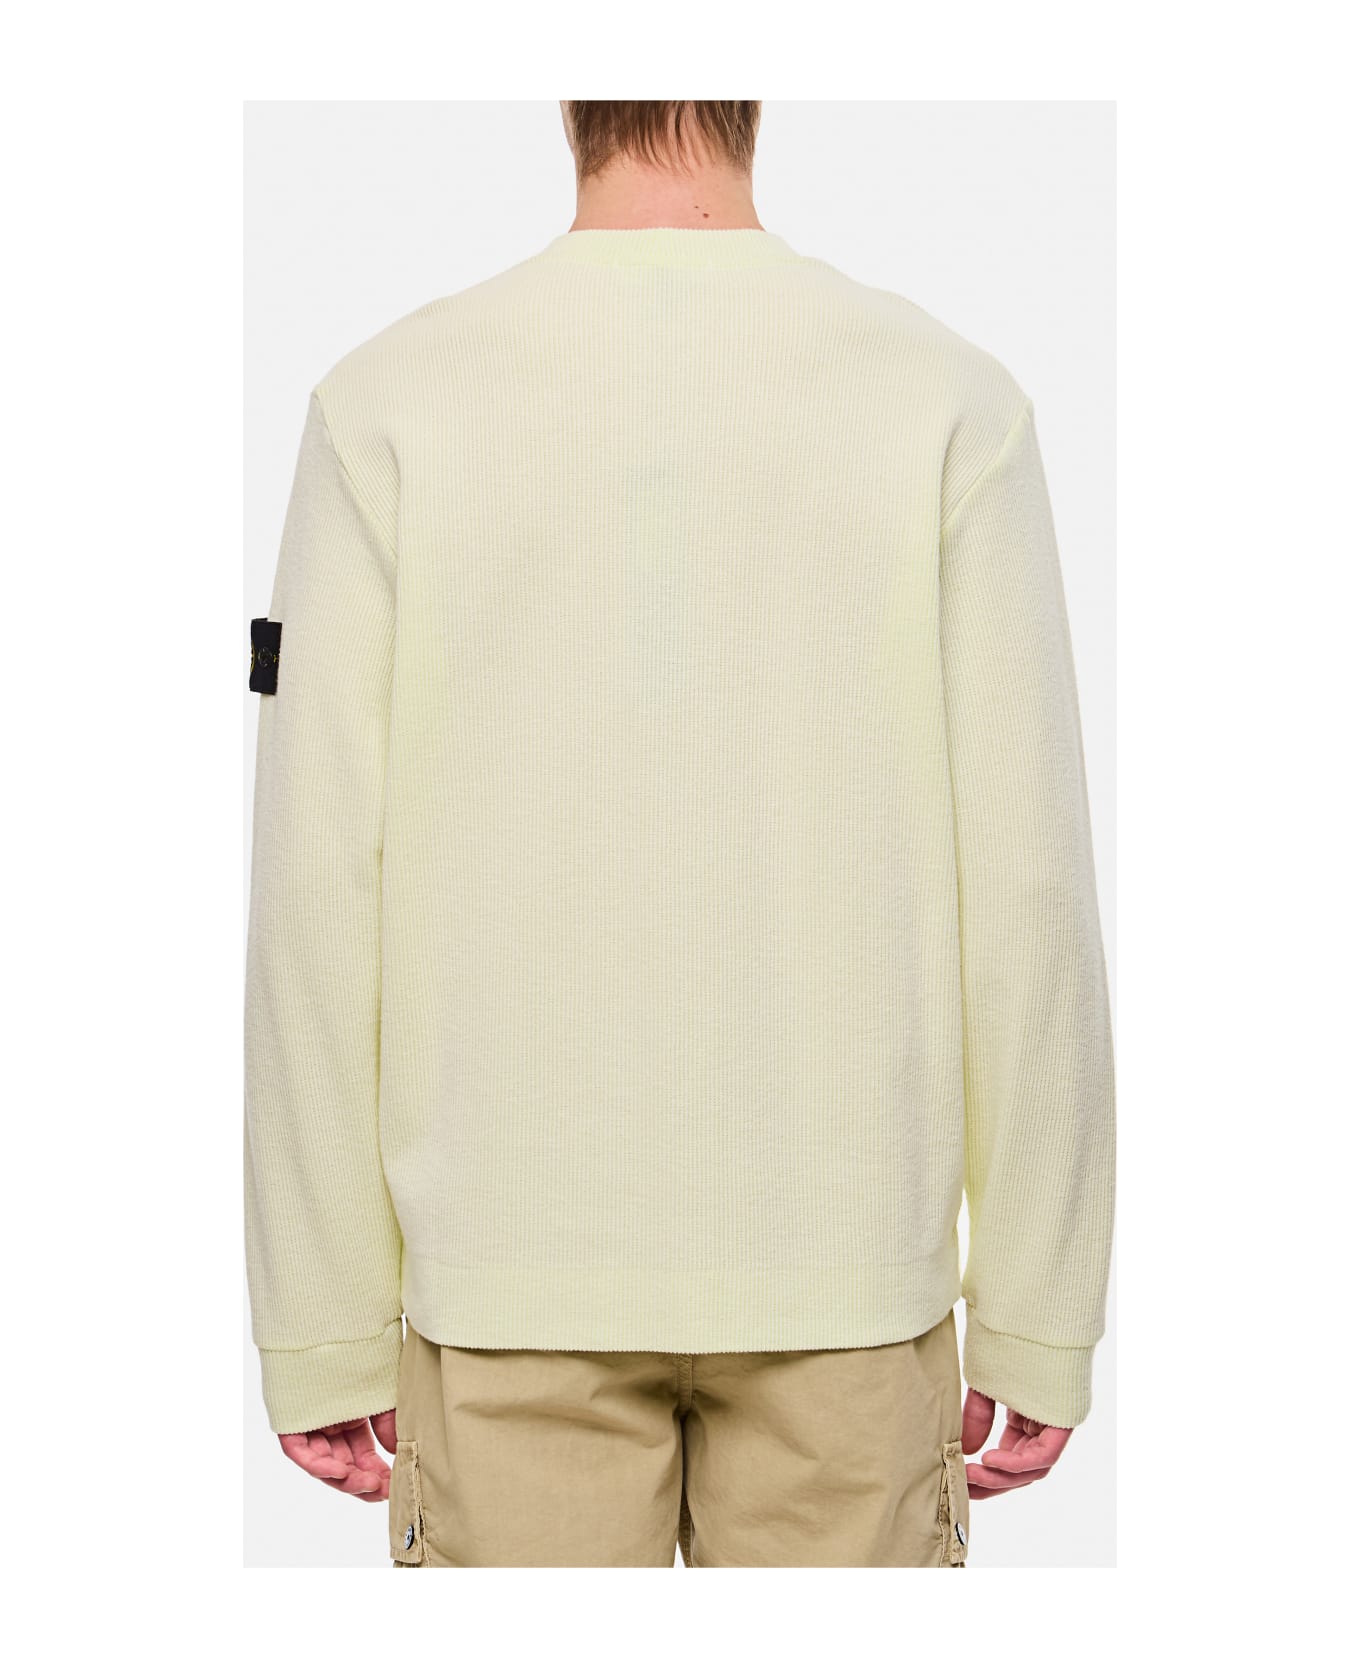 Stone Island Crewneck Sweater - White